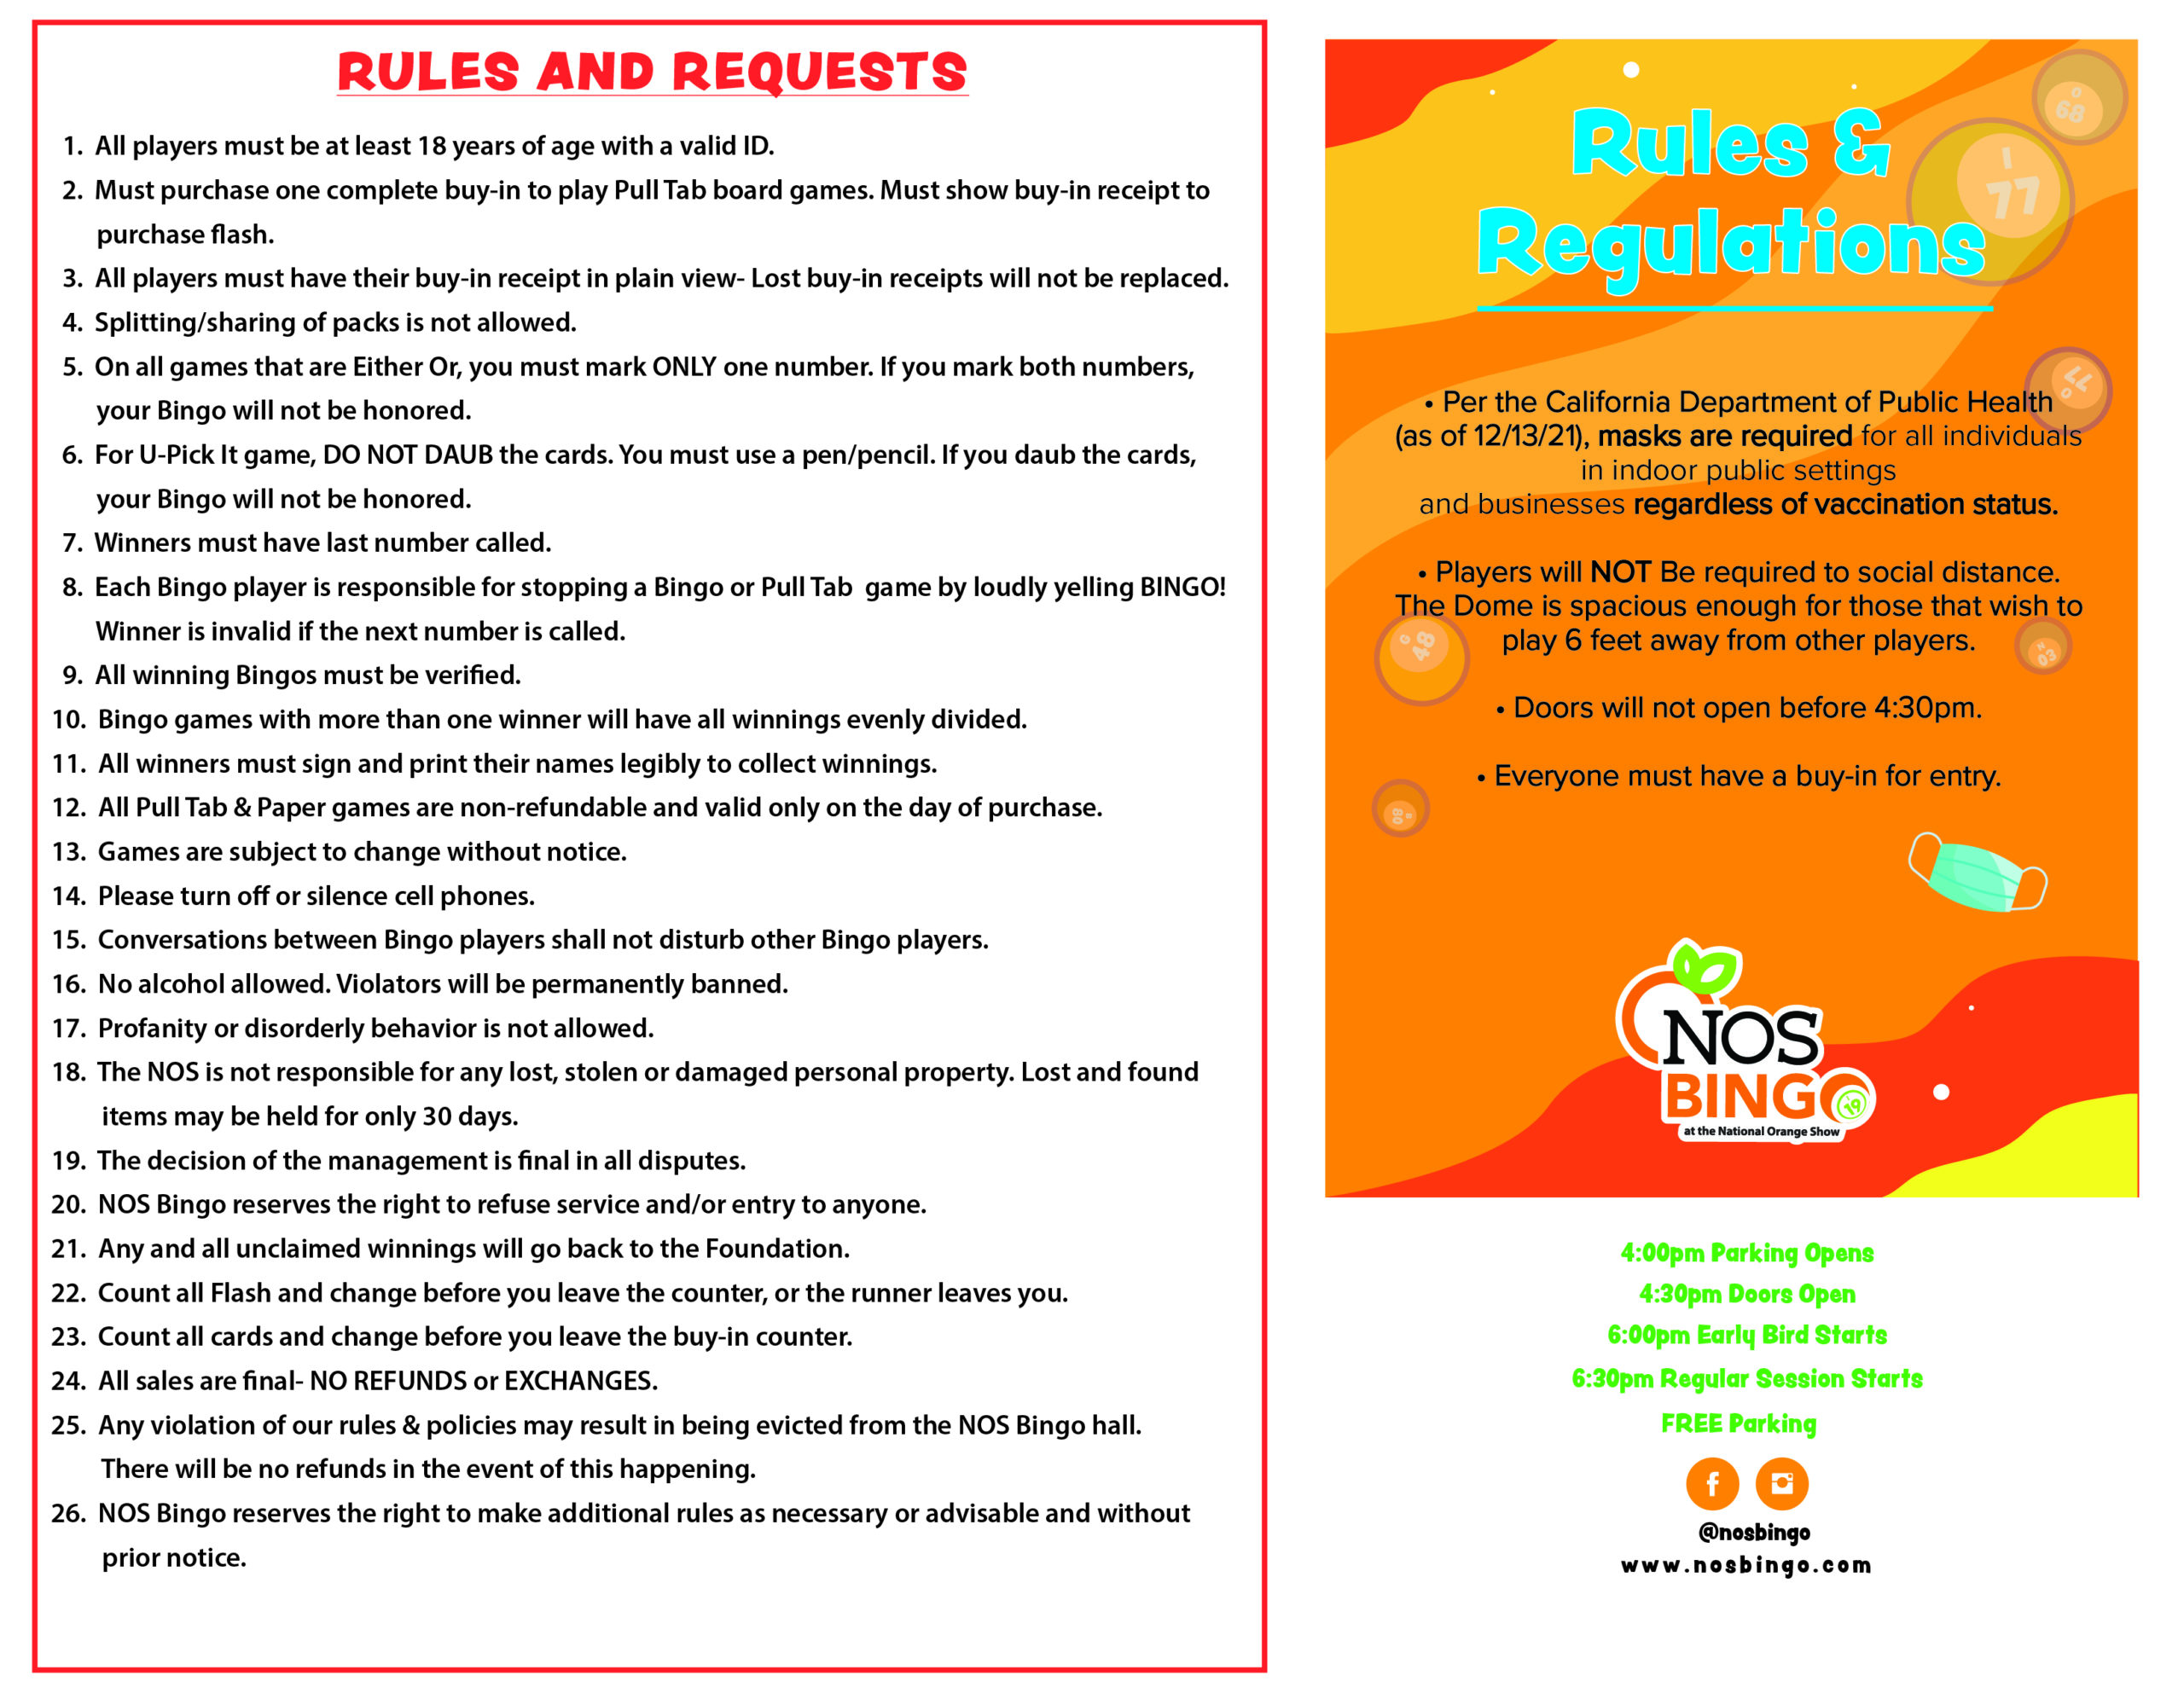 Bingo Rules and Regulations